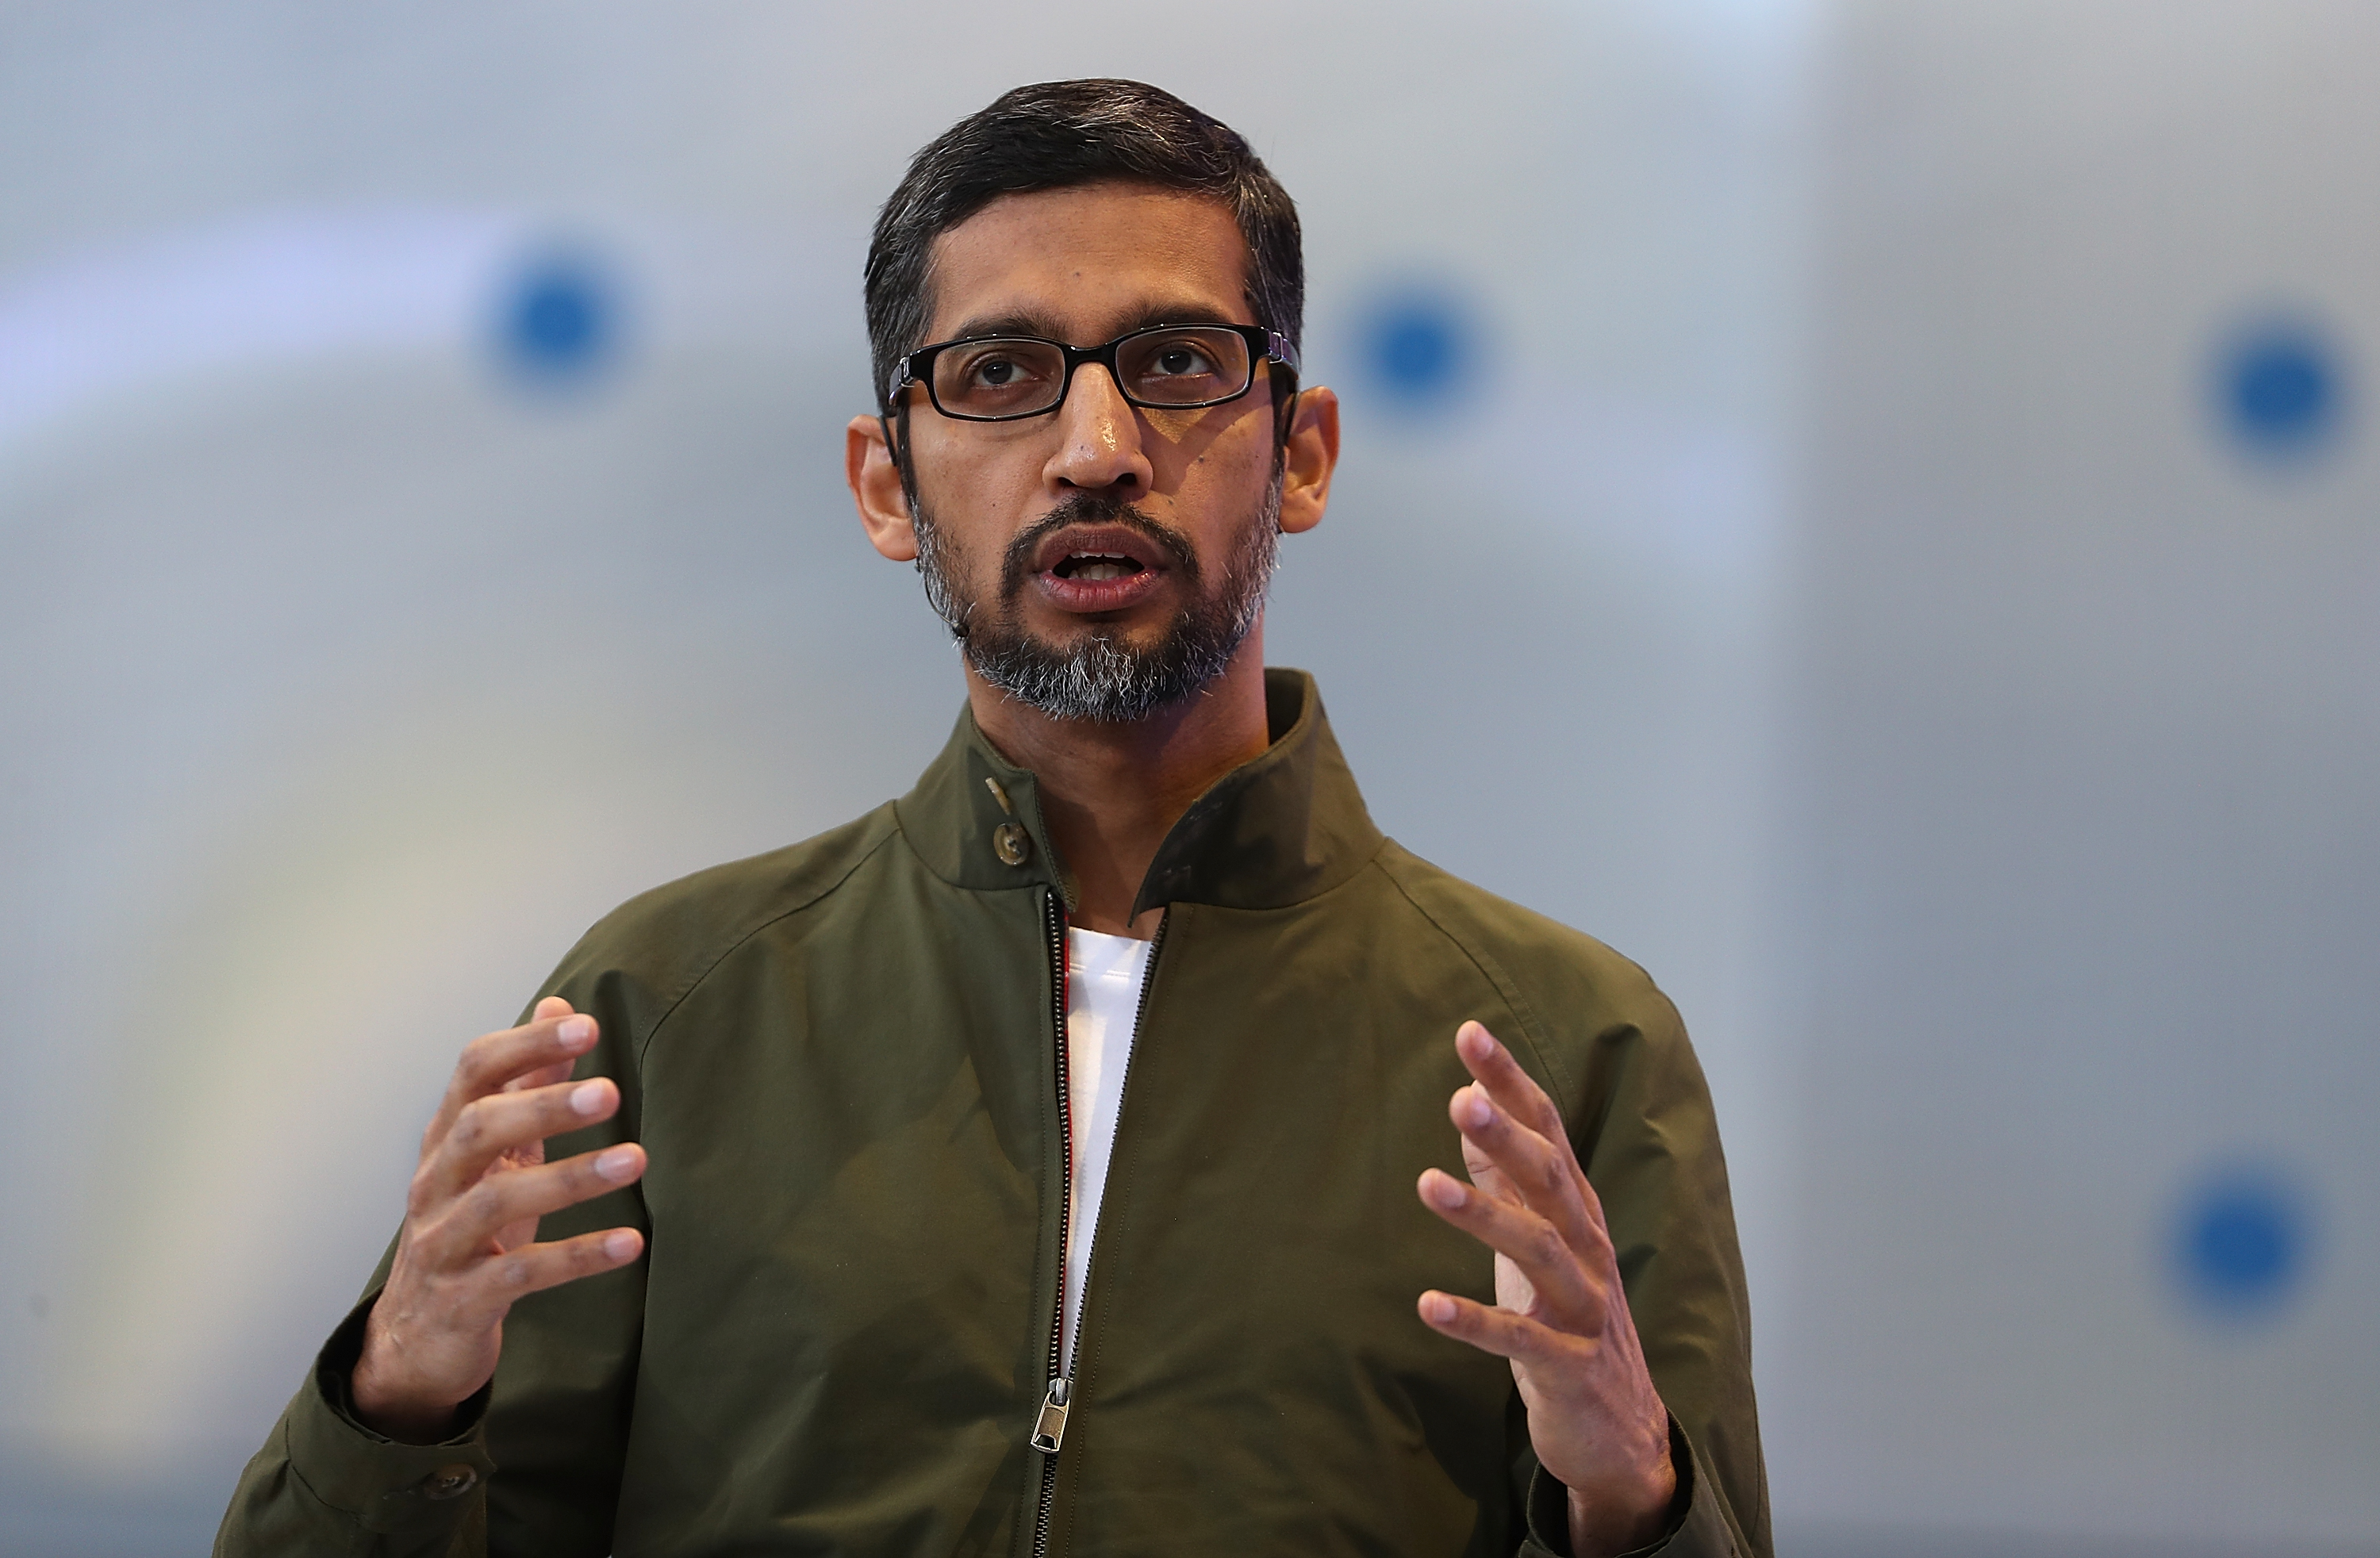 Google CEO Sundar Pichai speaking at Google I/O